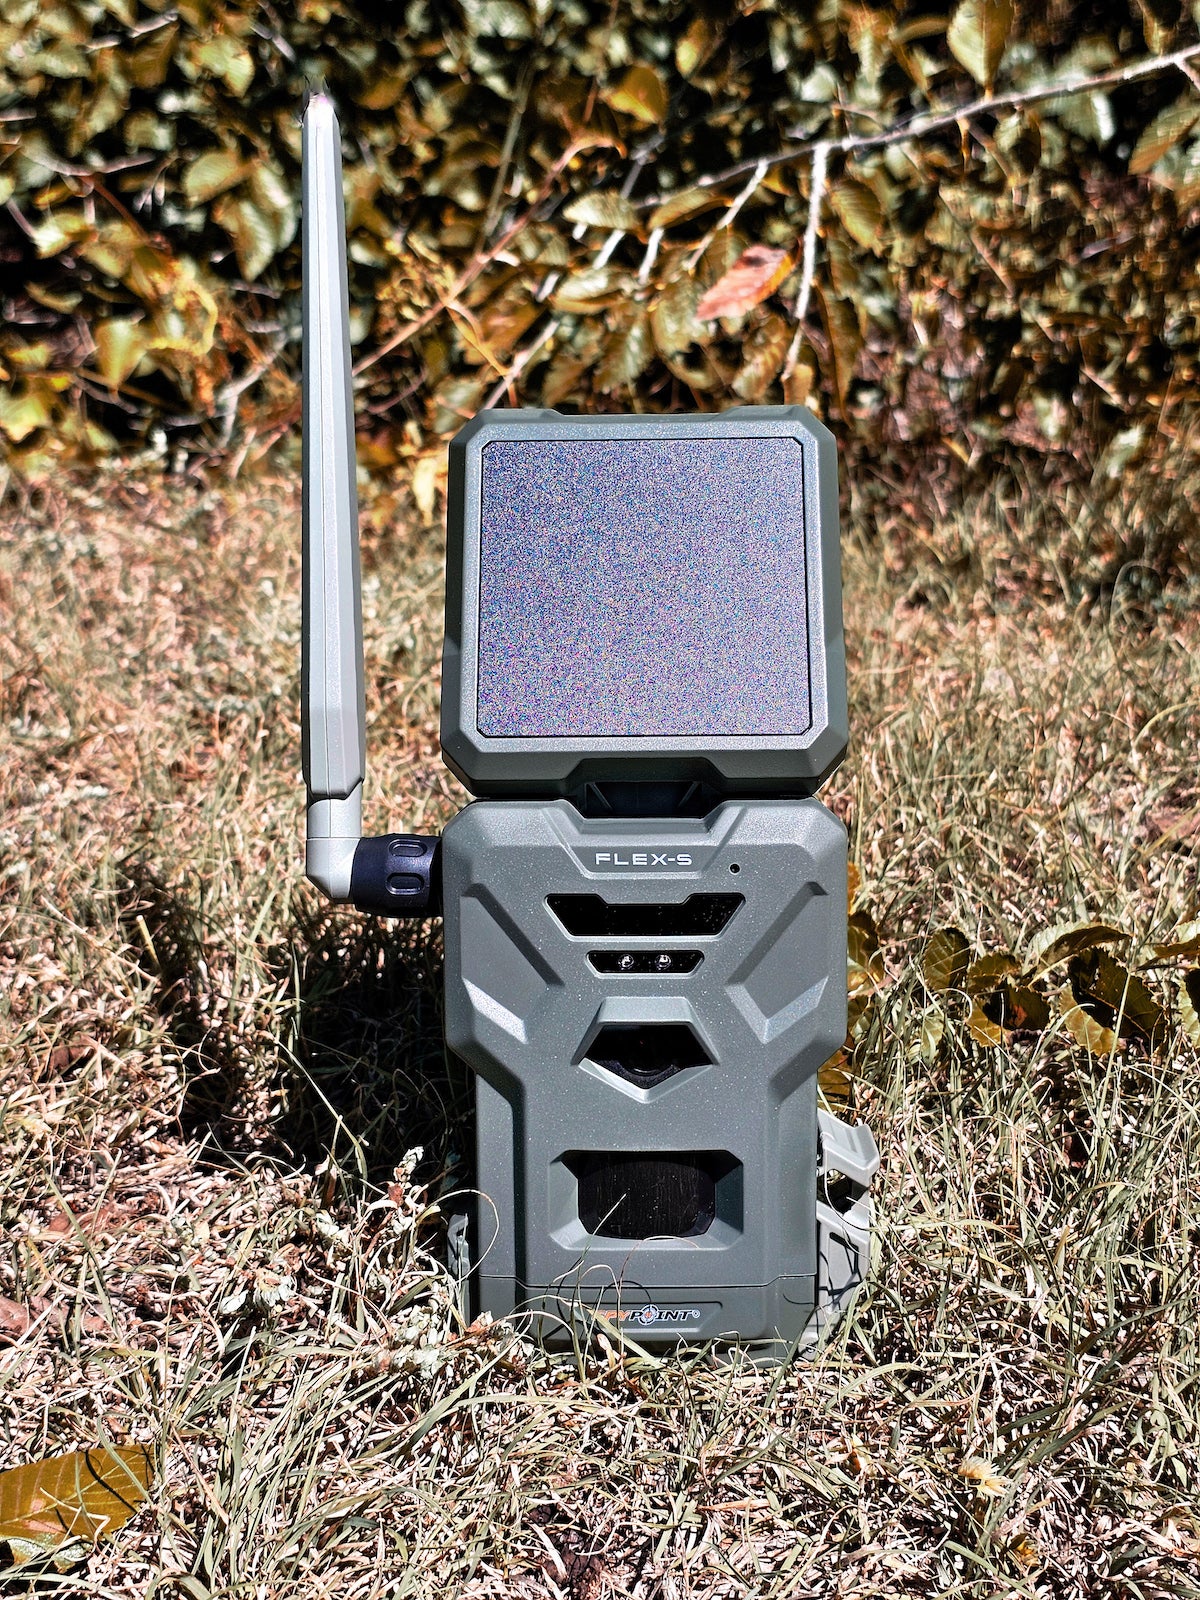 SpyPoint Flex-S Trail Camera sitting on grass